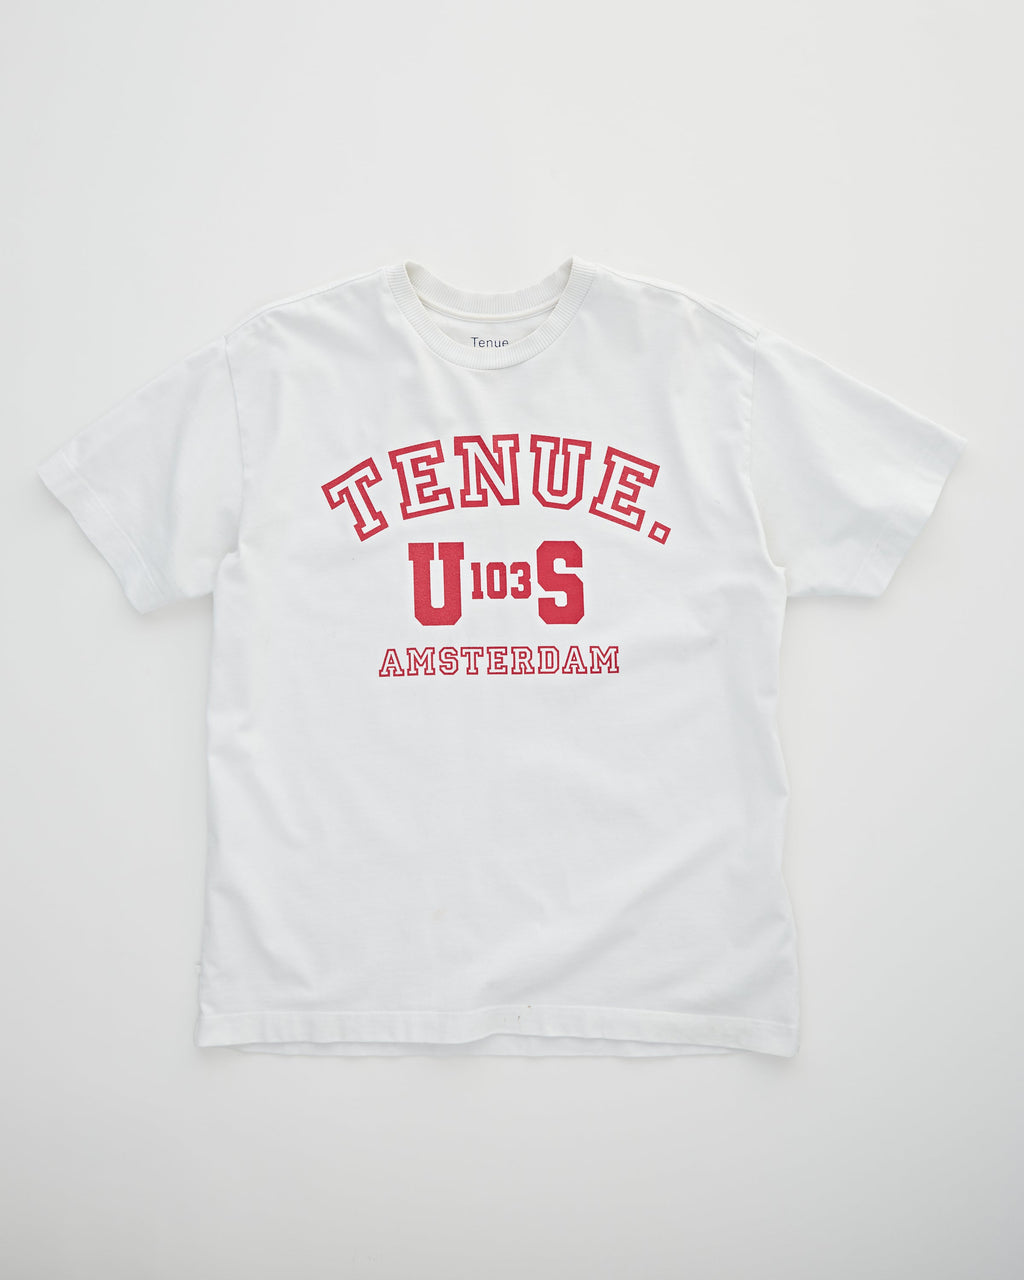 Tenue. Bruce US103 White T-shirt S/S Men